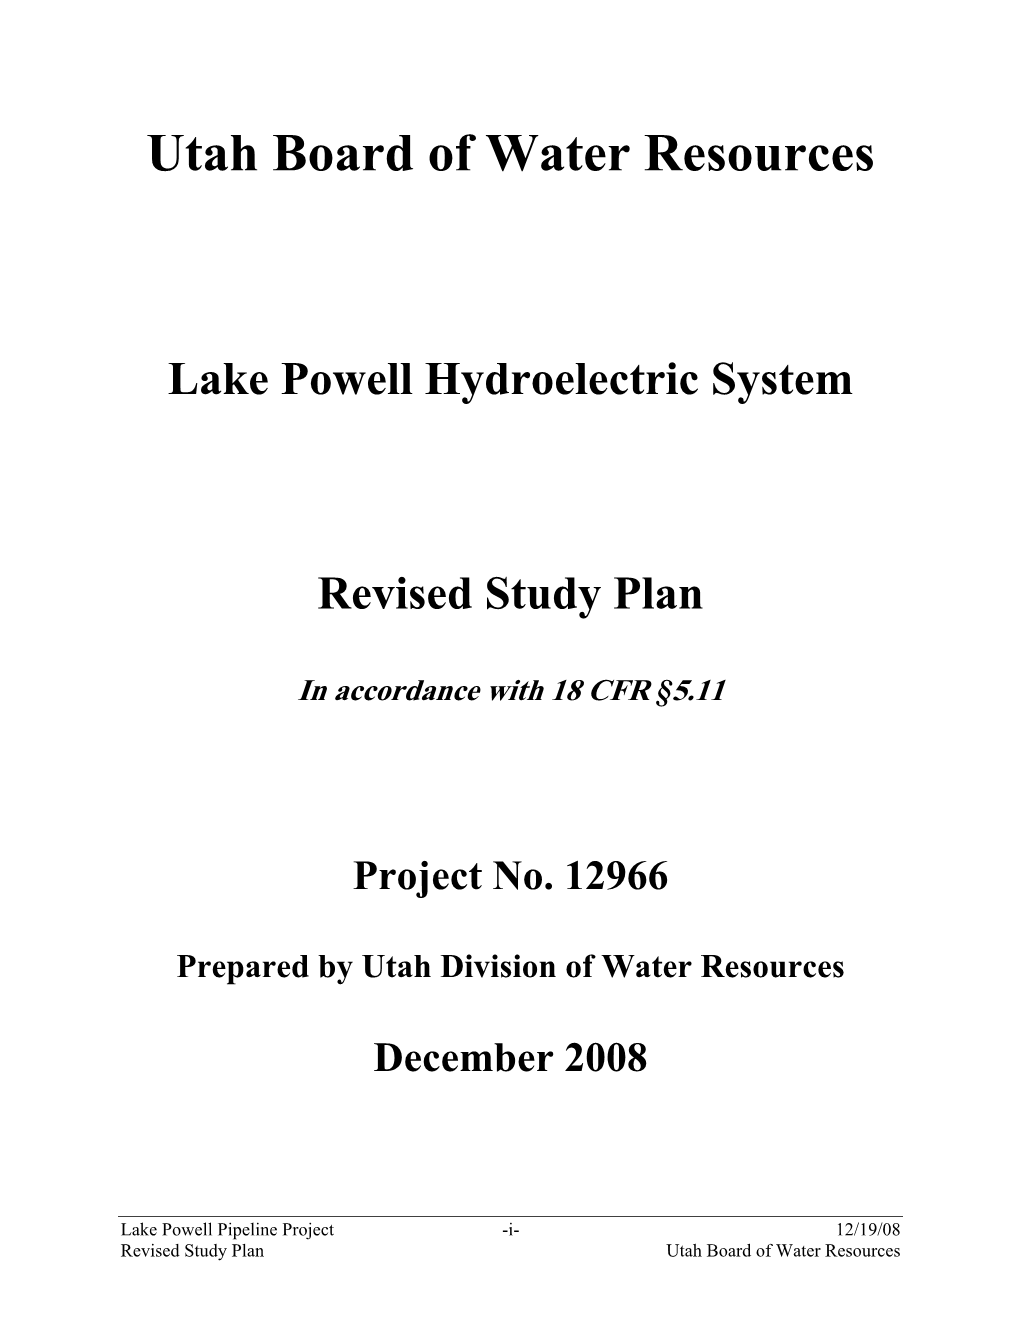 STUDY PLANS Revised 12-19-2008